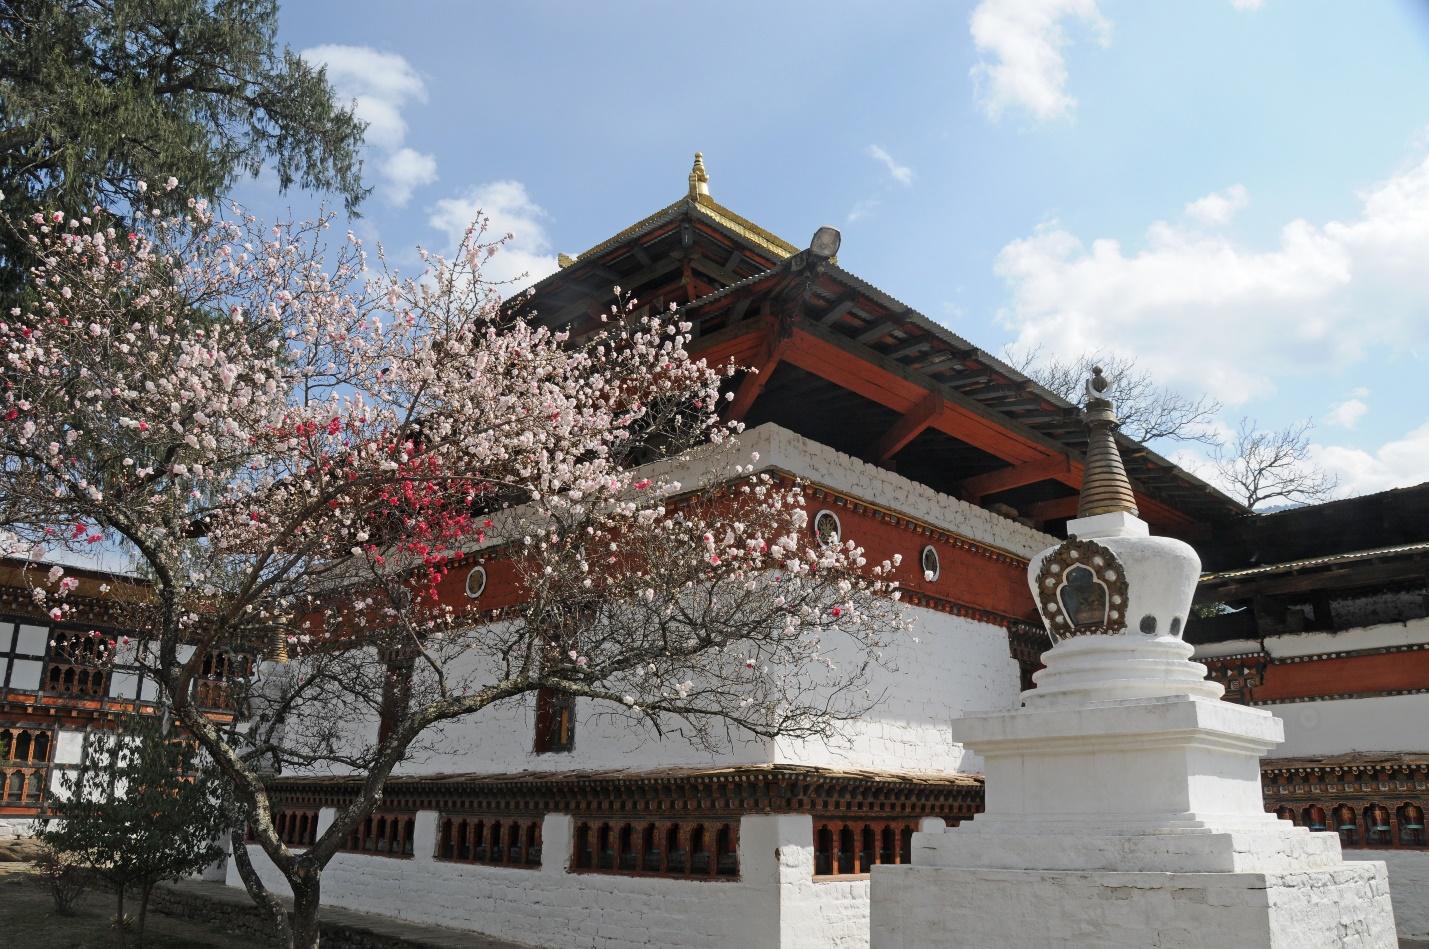 Kyichu Lhakhang, Paro, Bhutan Attractions | Timings, Entry Fee | Holidify